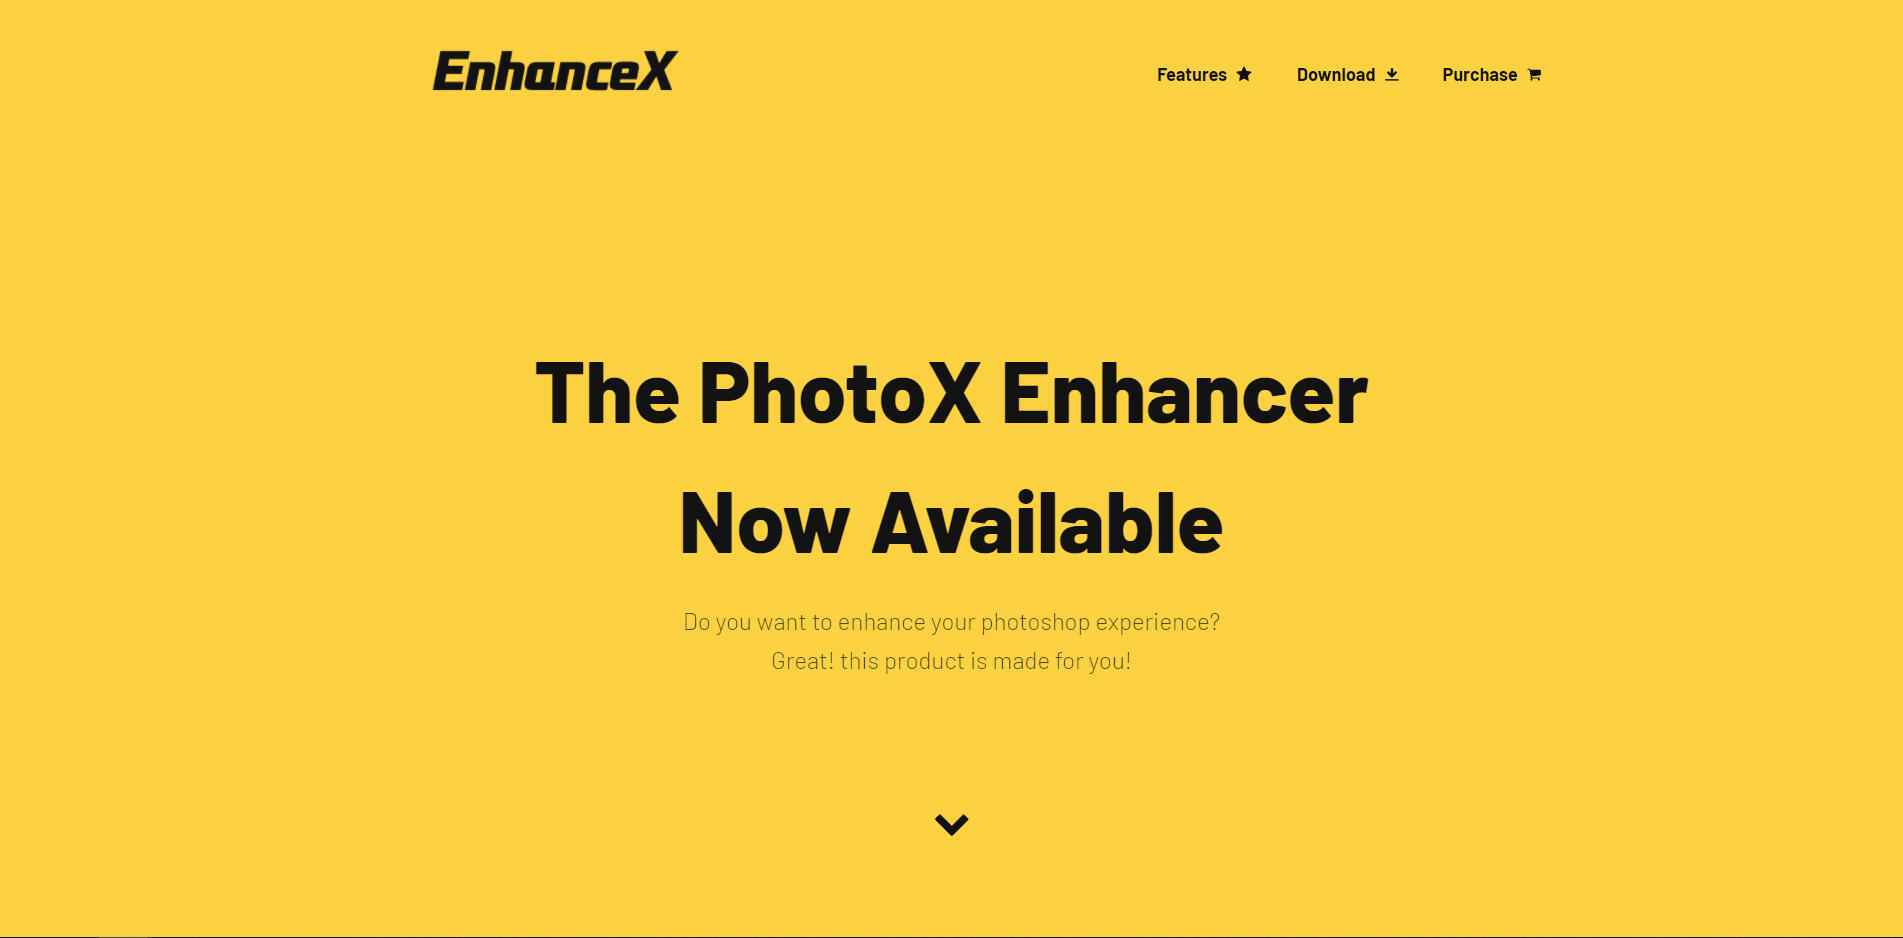 EnhanceX